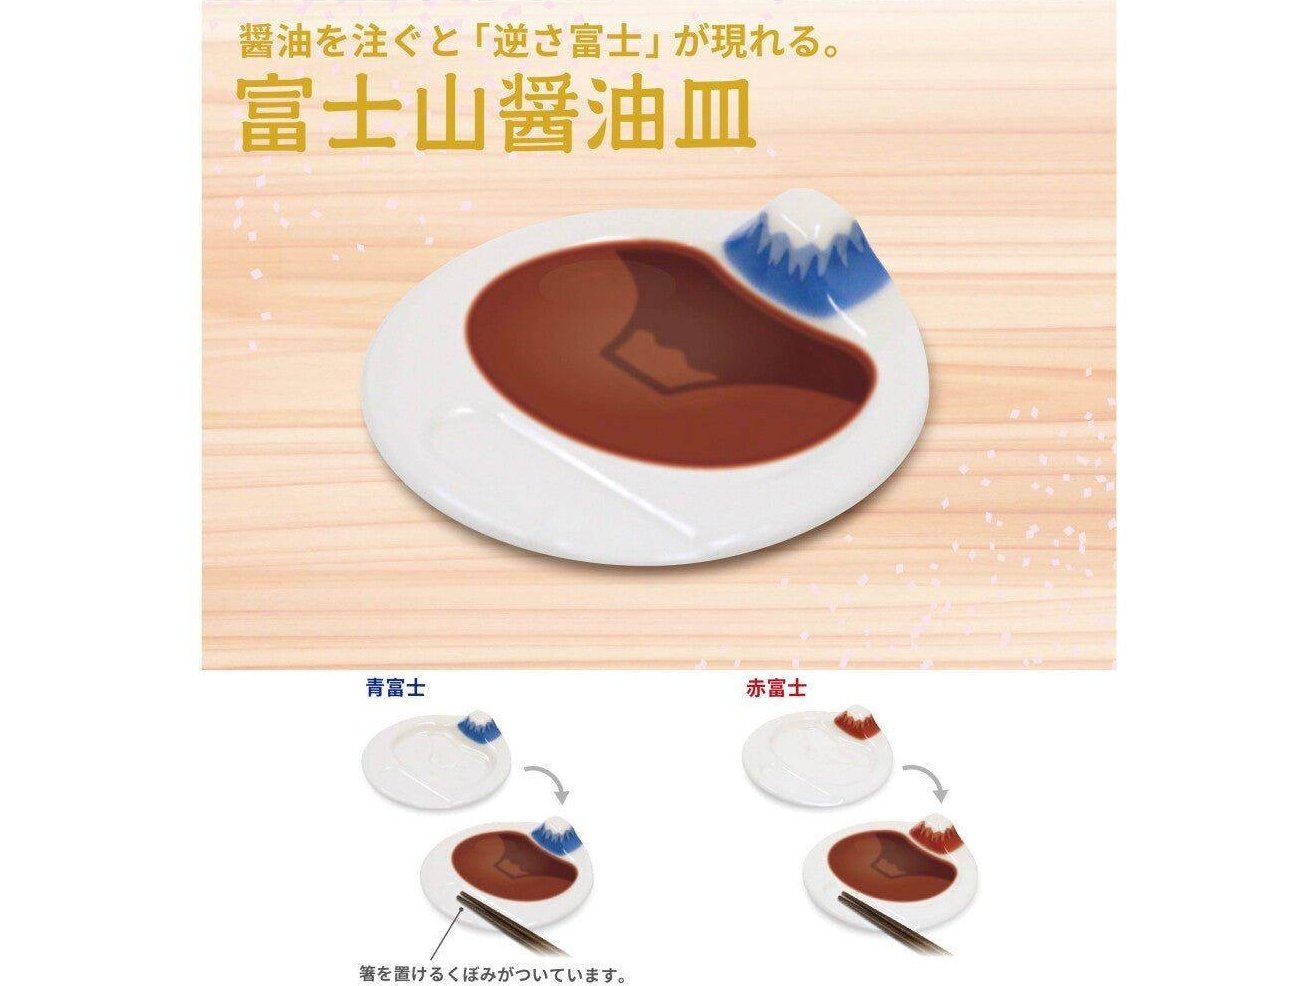 Aruta Mt. Fuji Soy Sauce Plate